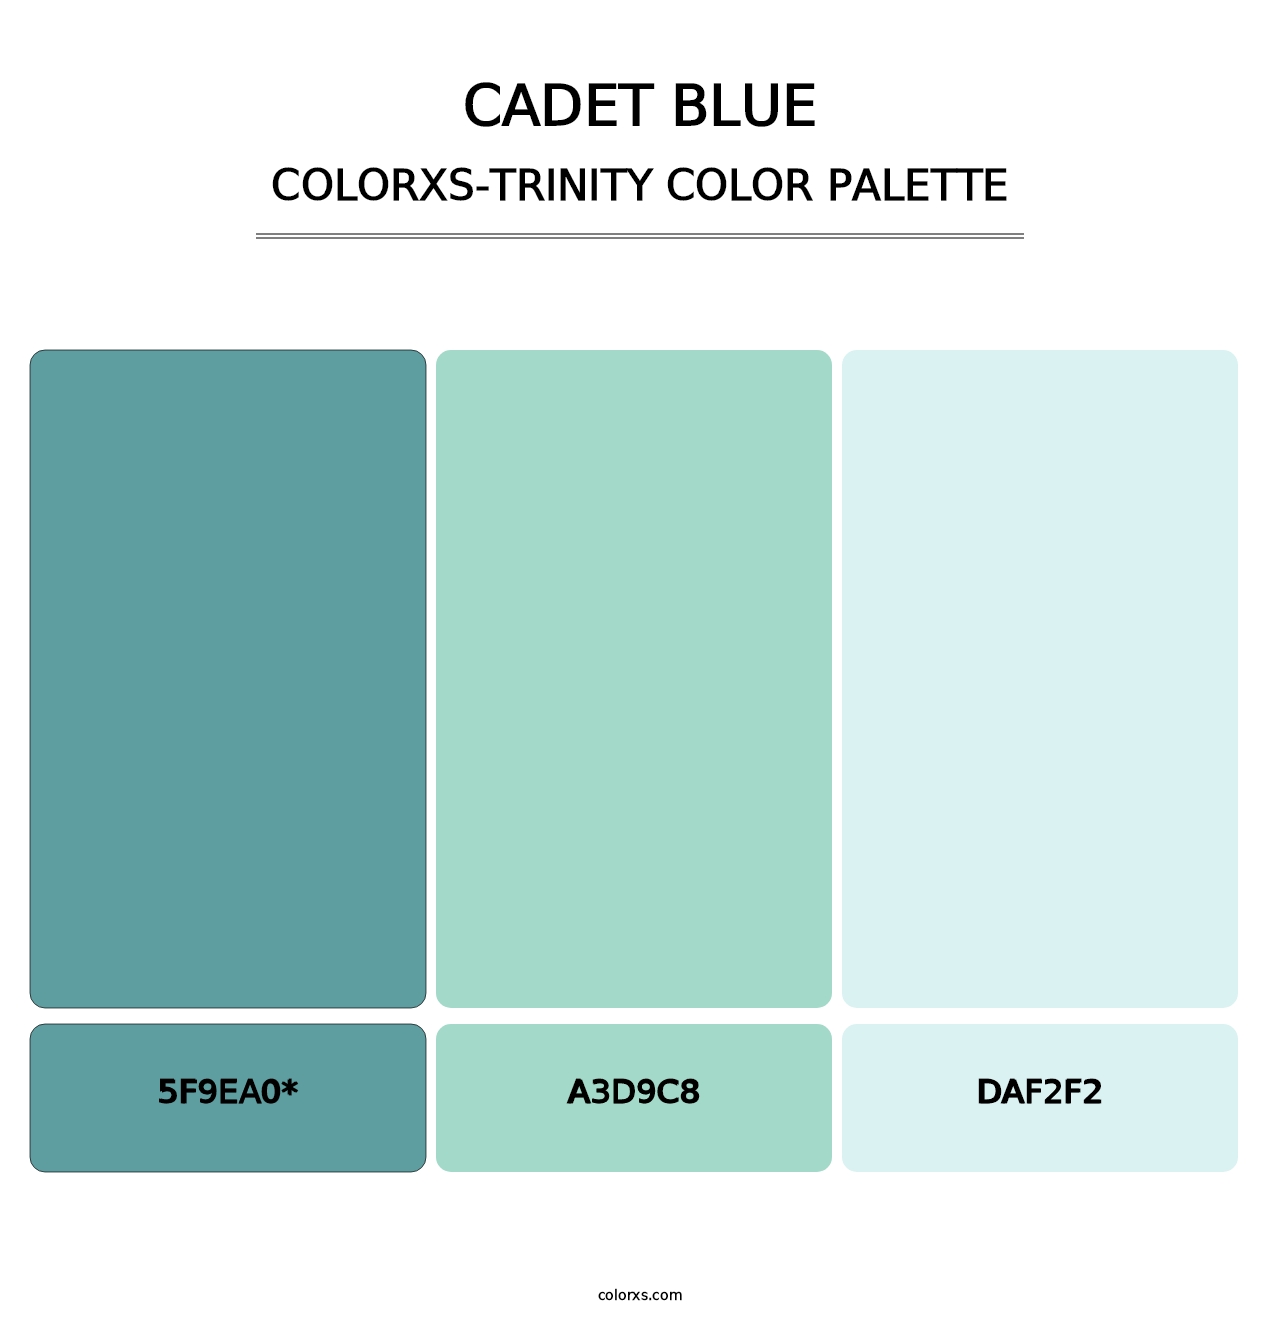 Cadet Blue - Colorxs Trinity Palette